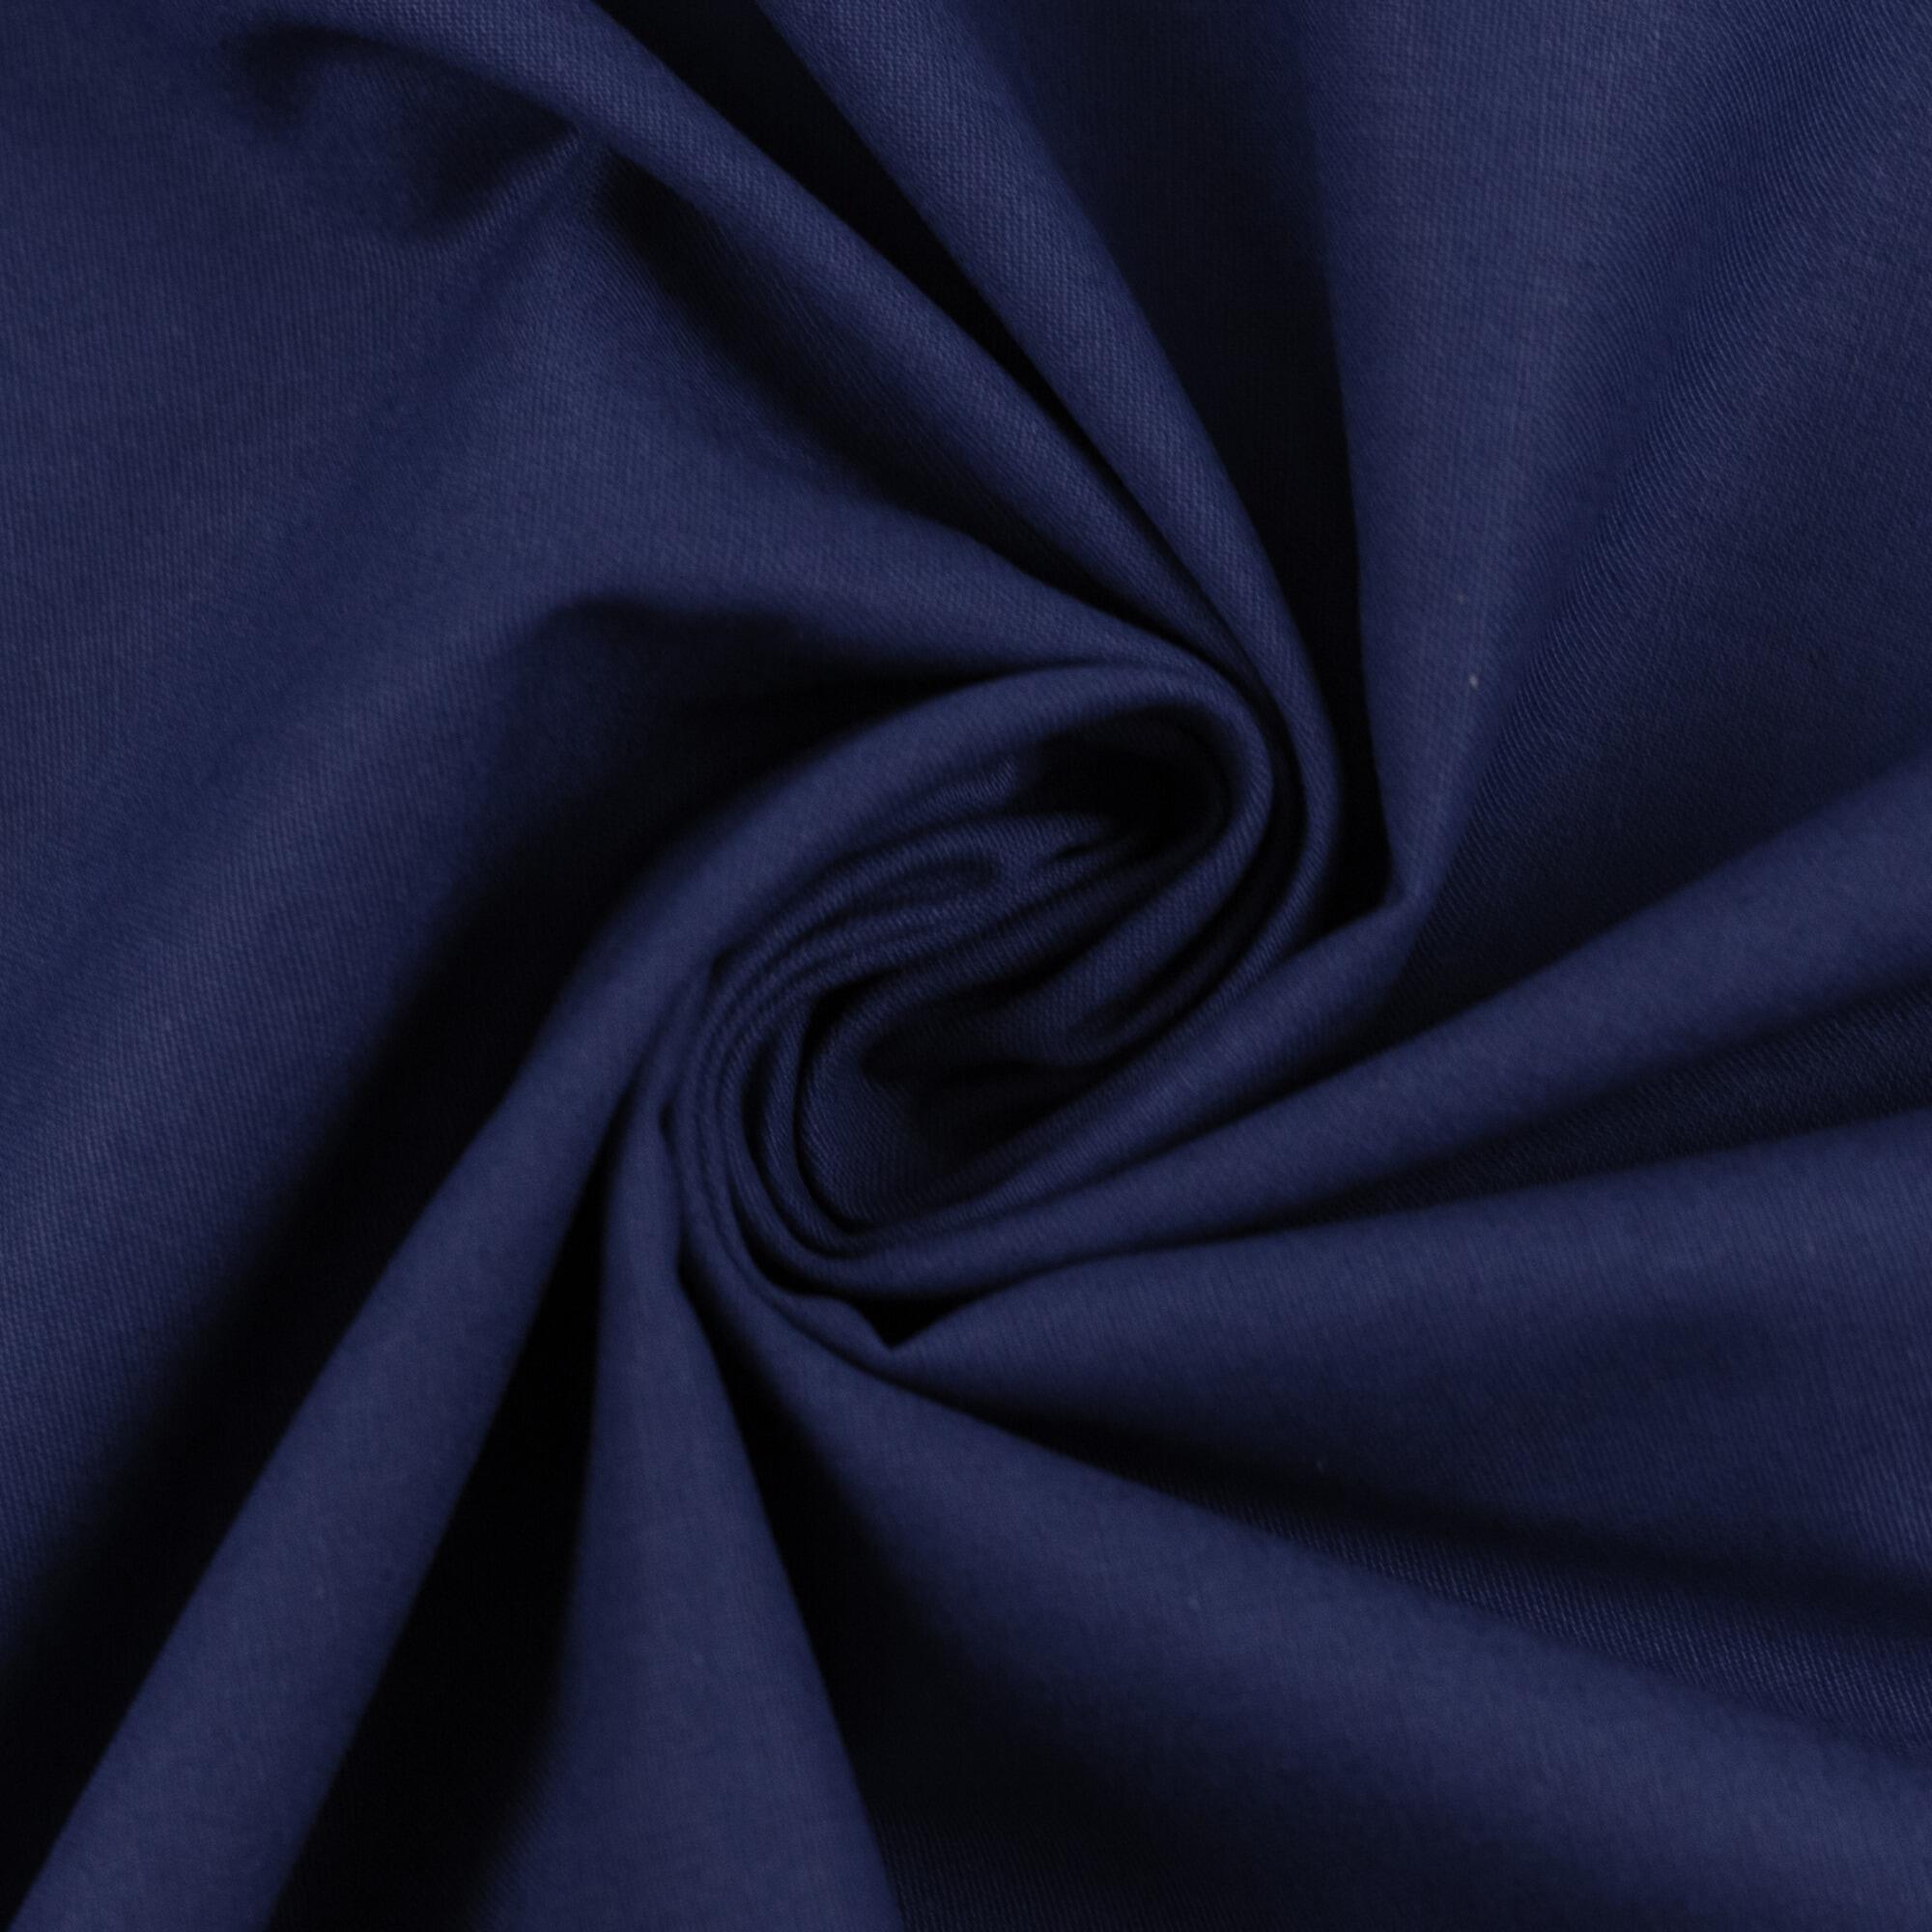 Plain cotton fabric dark navy blue